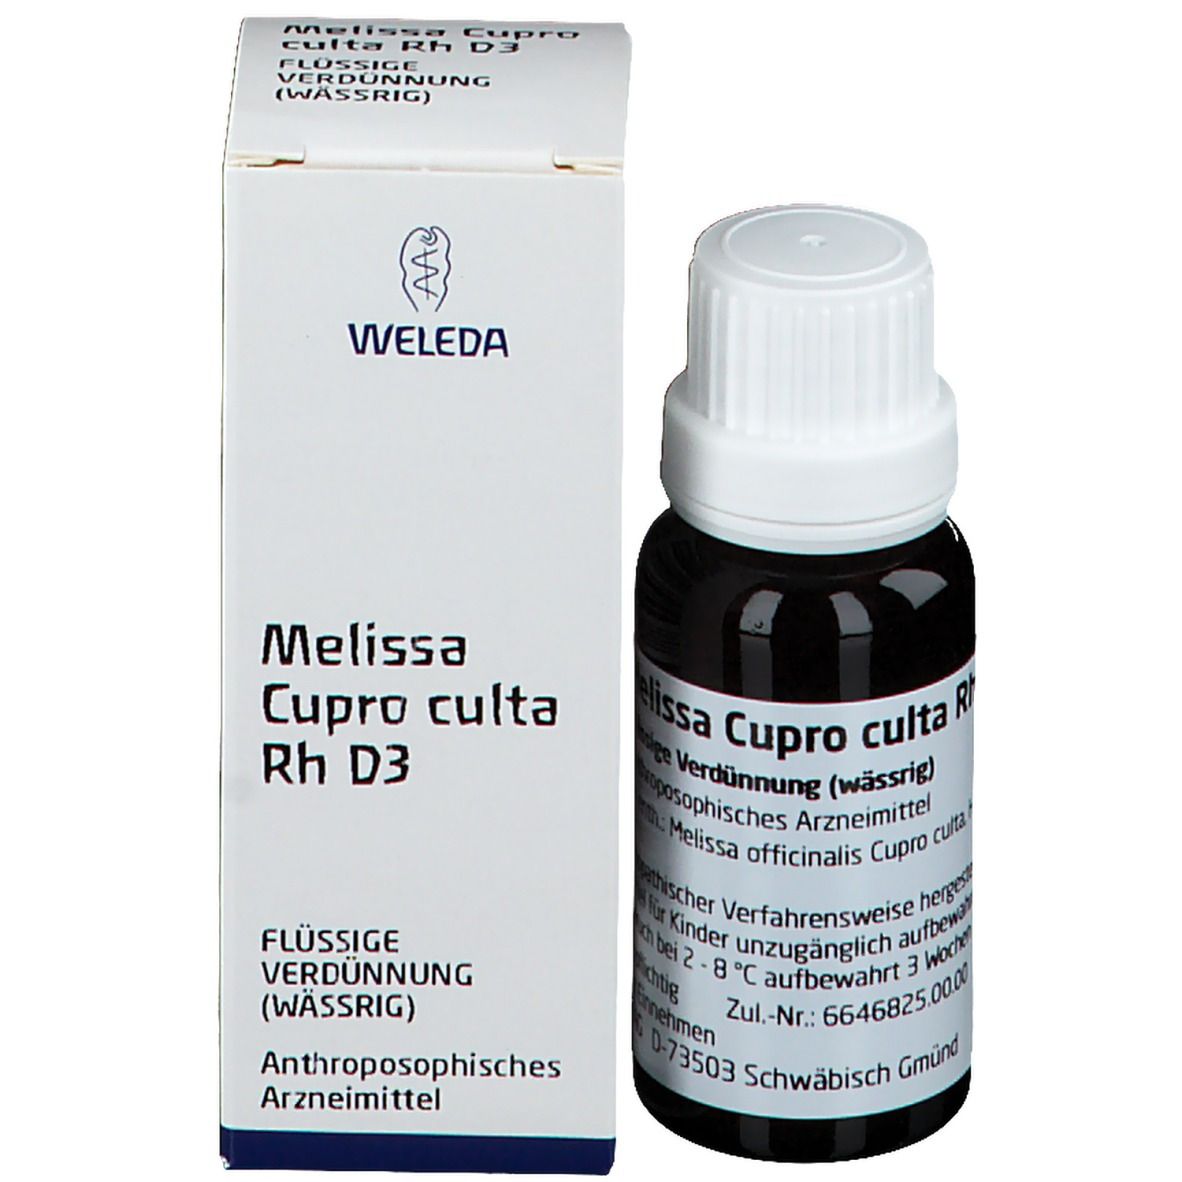 Melissa Cupro Culta RH D3